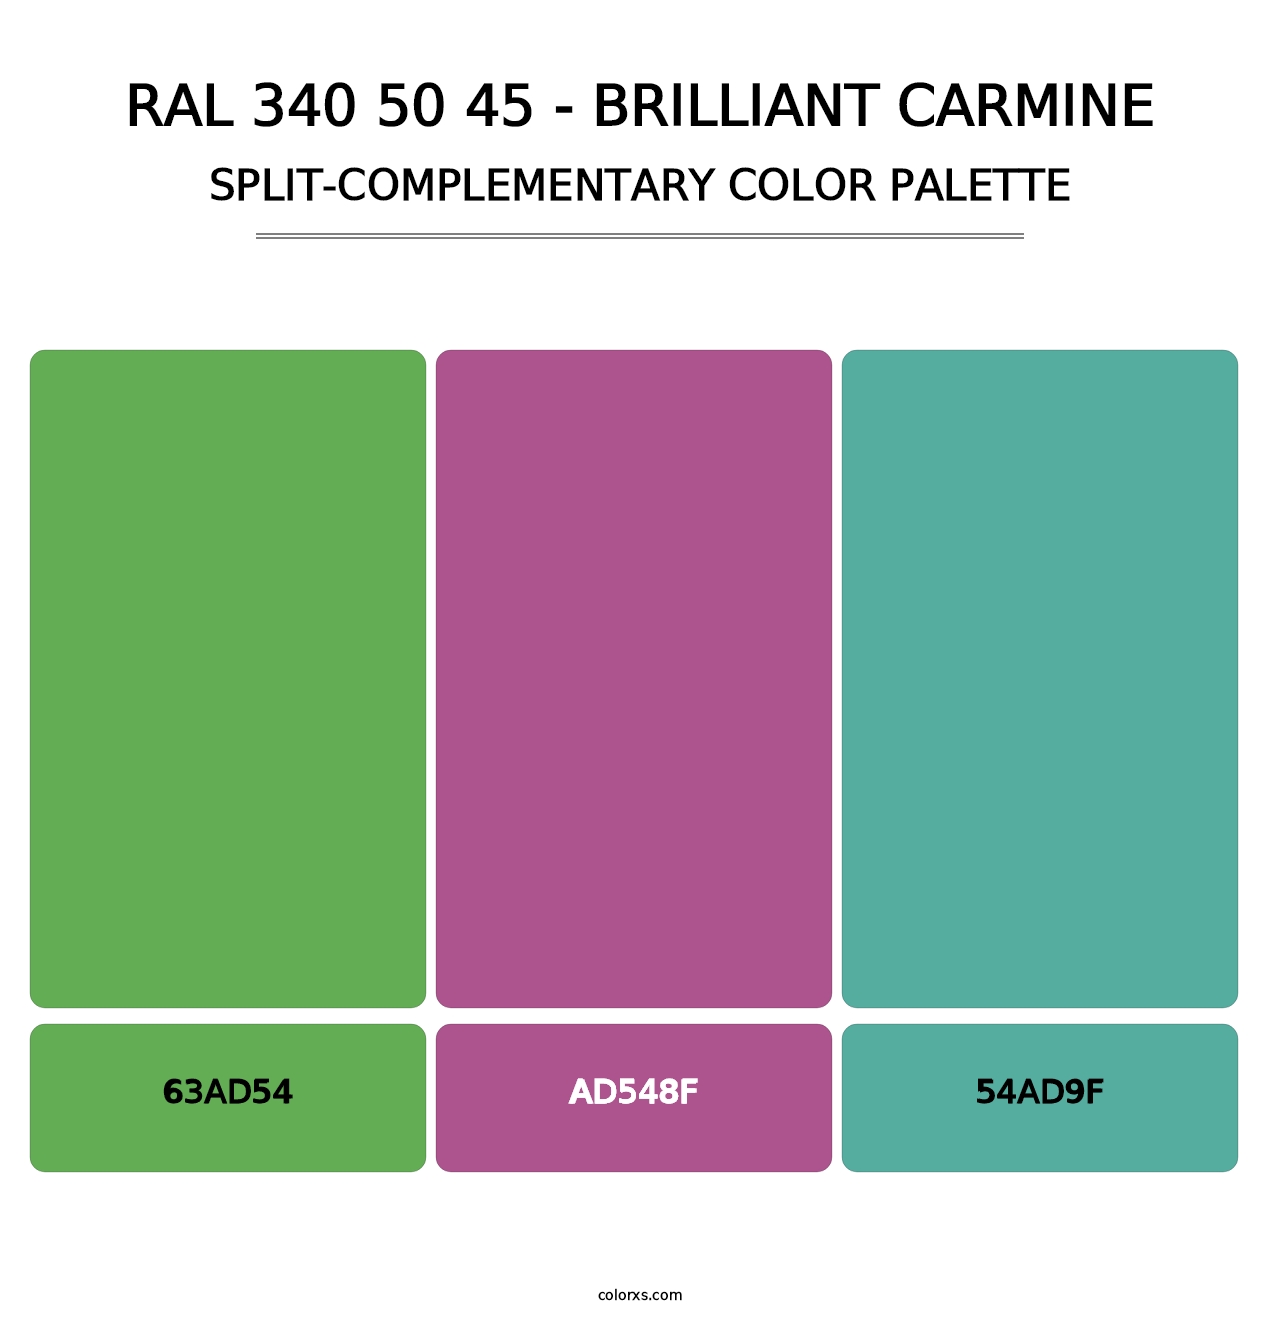 RAL 340 50 45 - Brilliant Carmine - Split-Complementary Color Palette